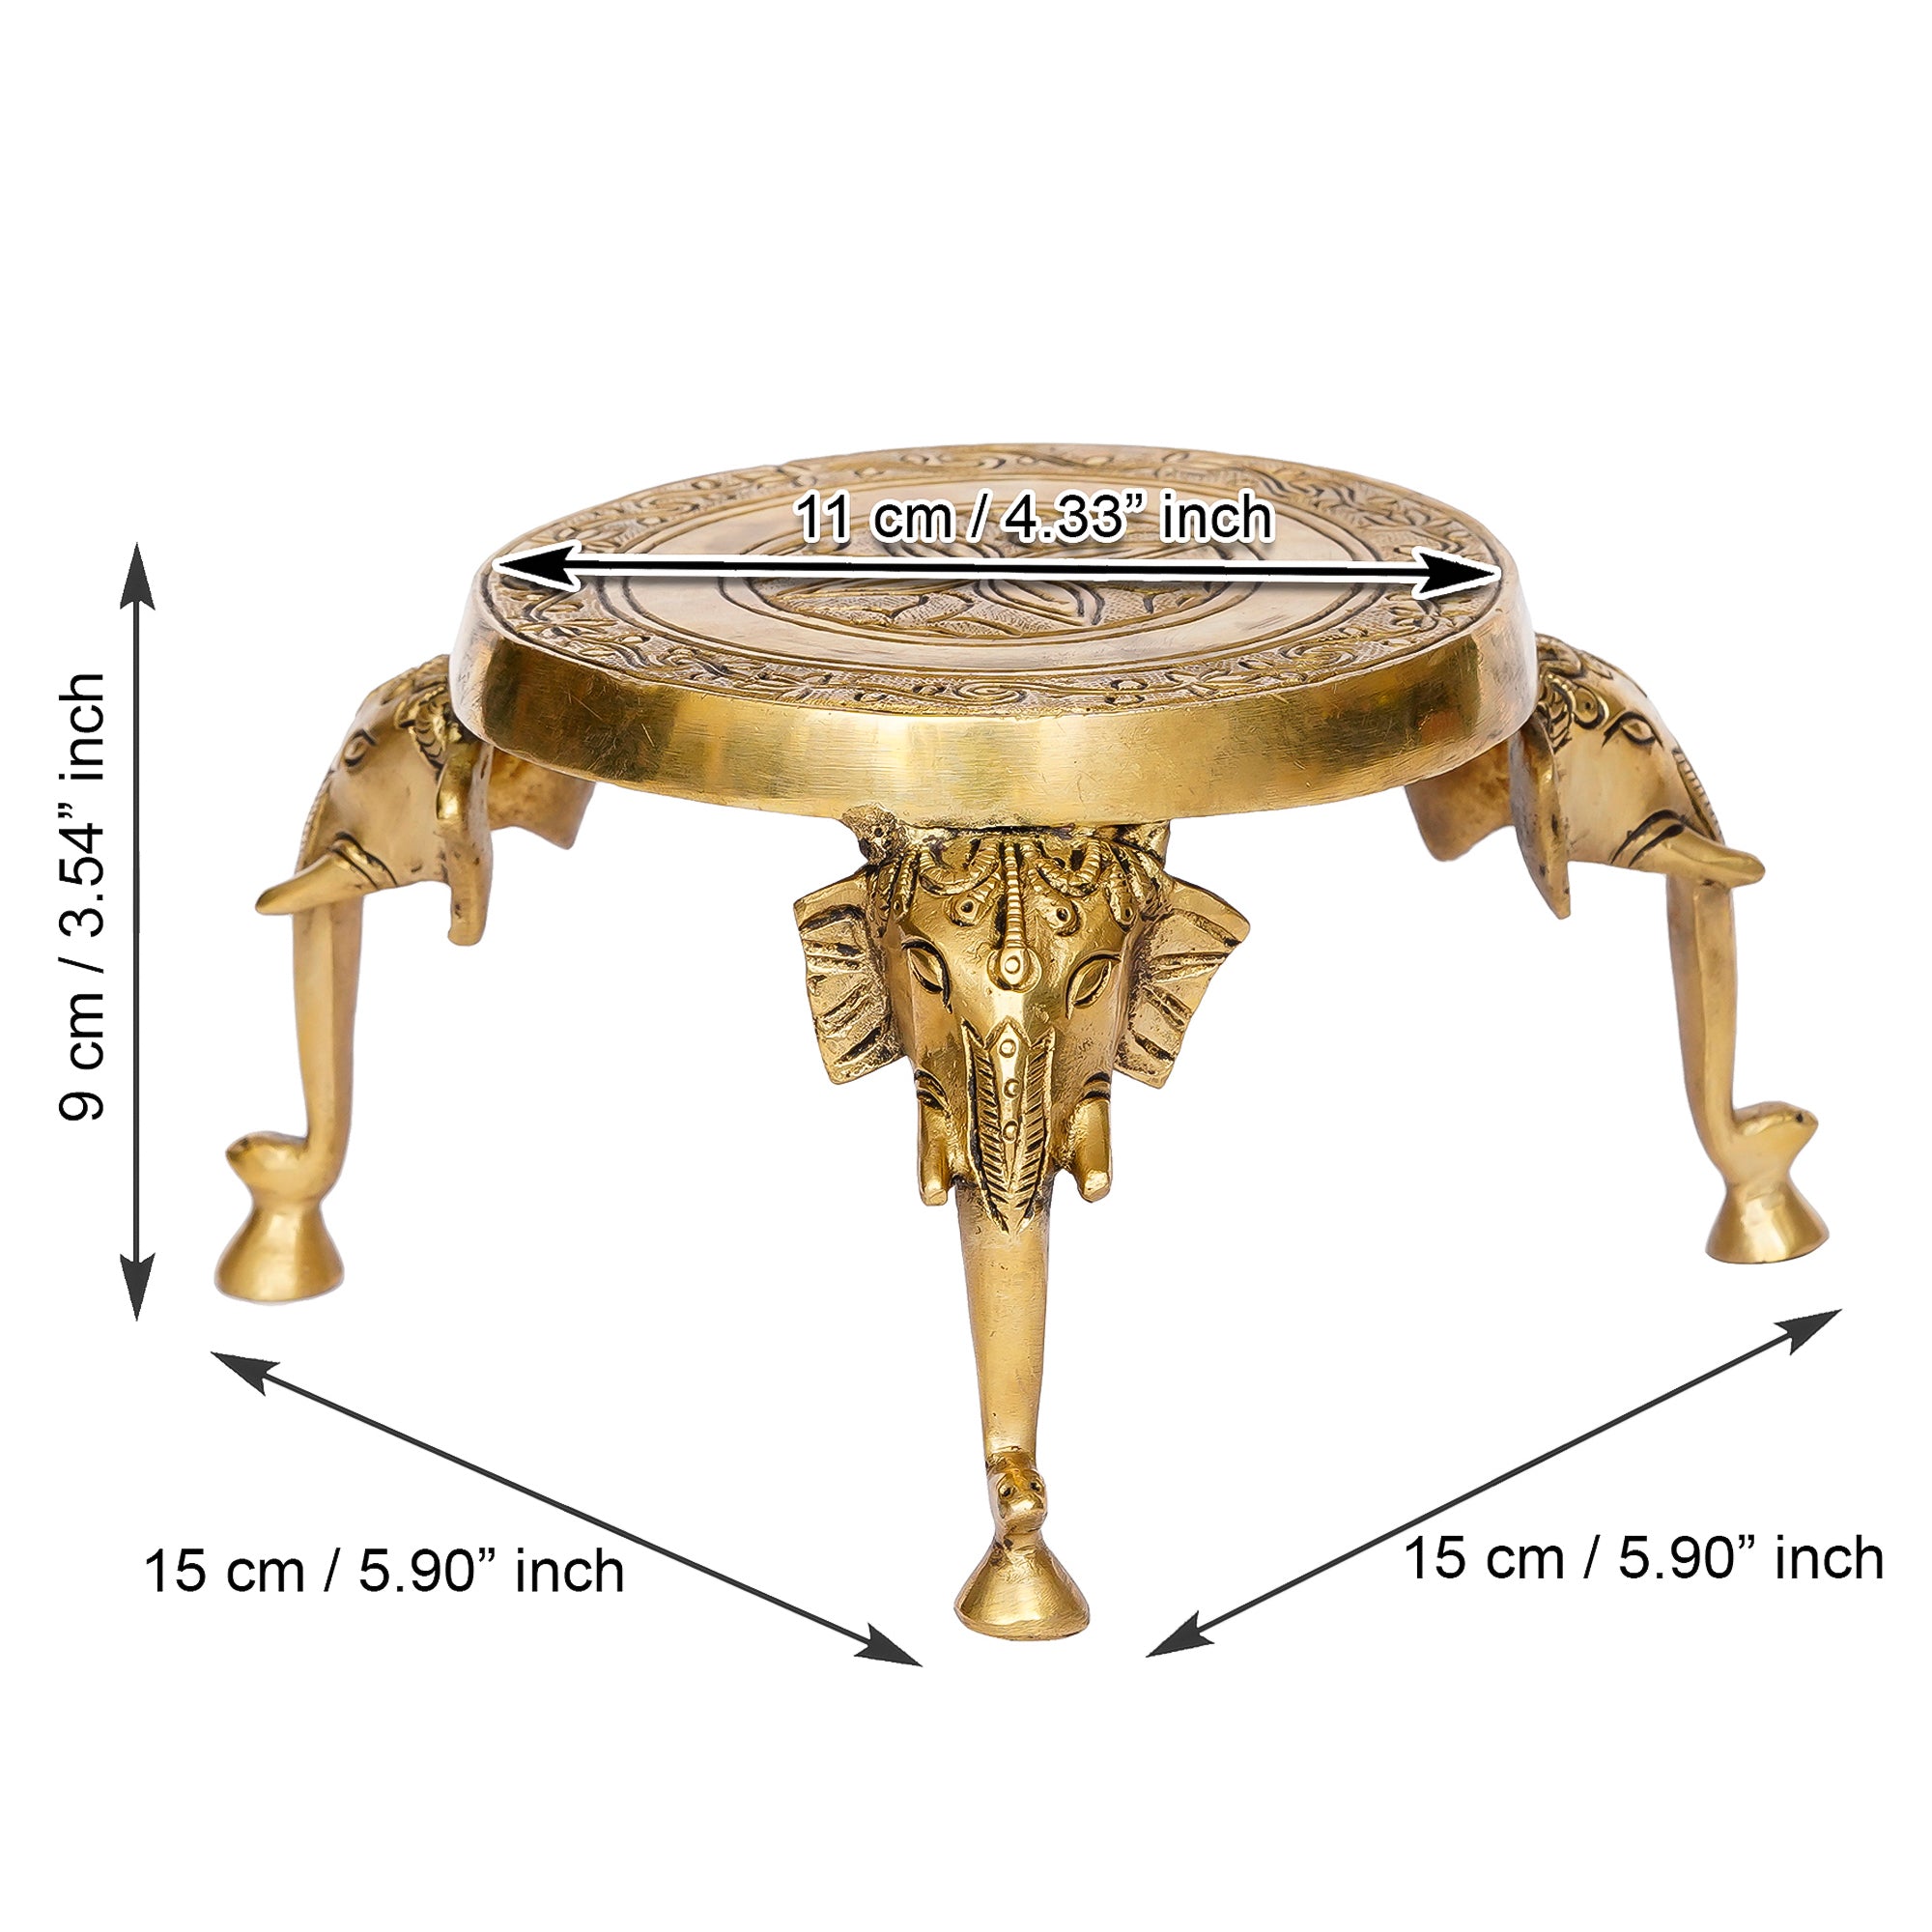 Decorative Brass Stool With Elephant Design Legs 3